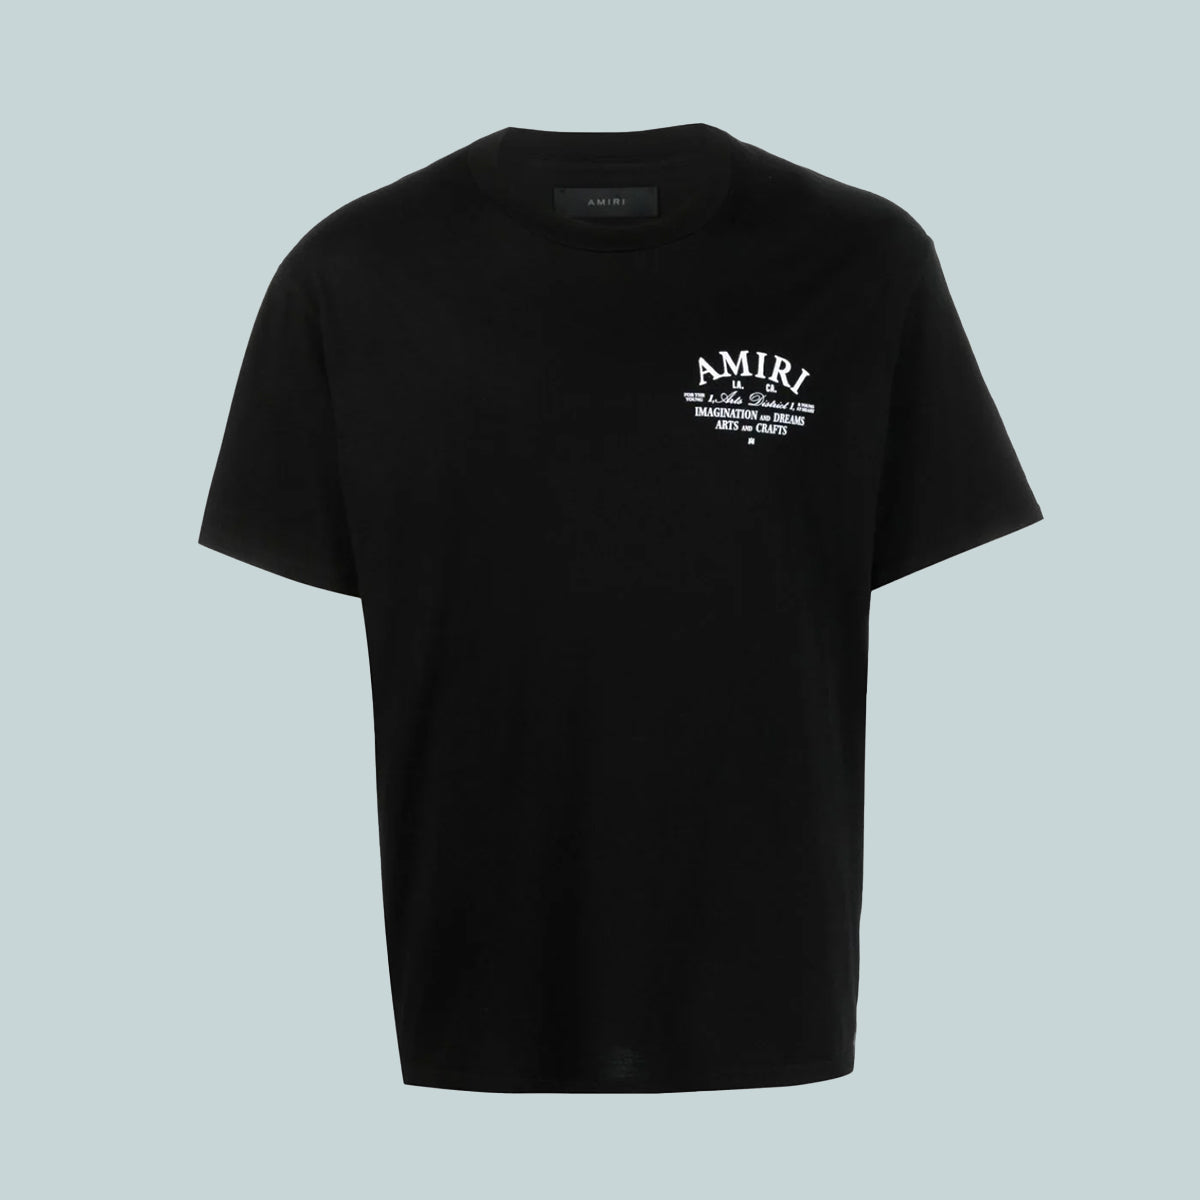 Arts District T-Shirt Black